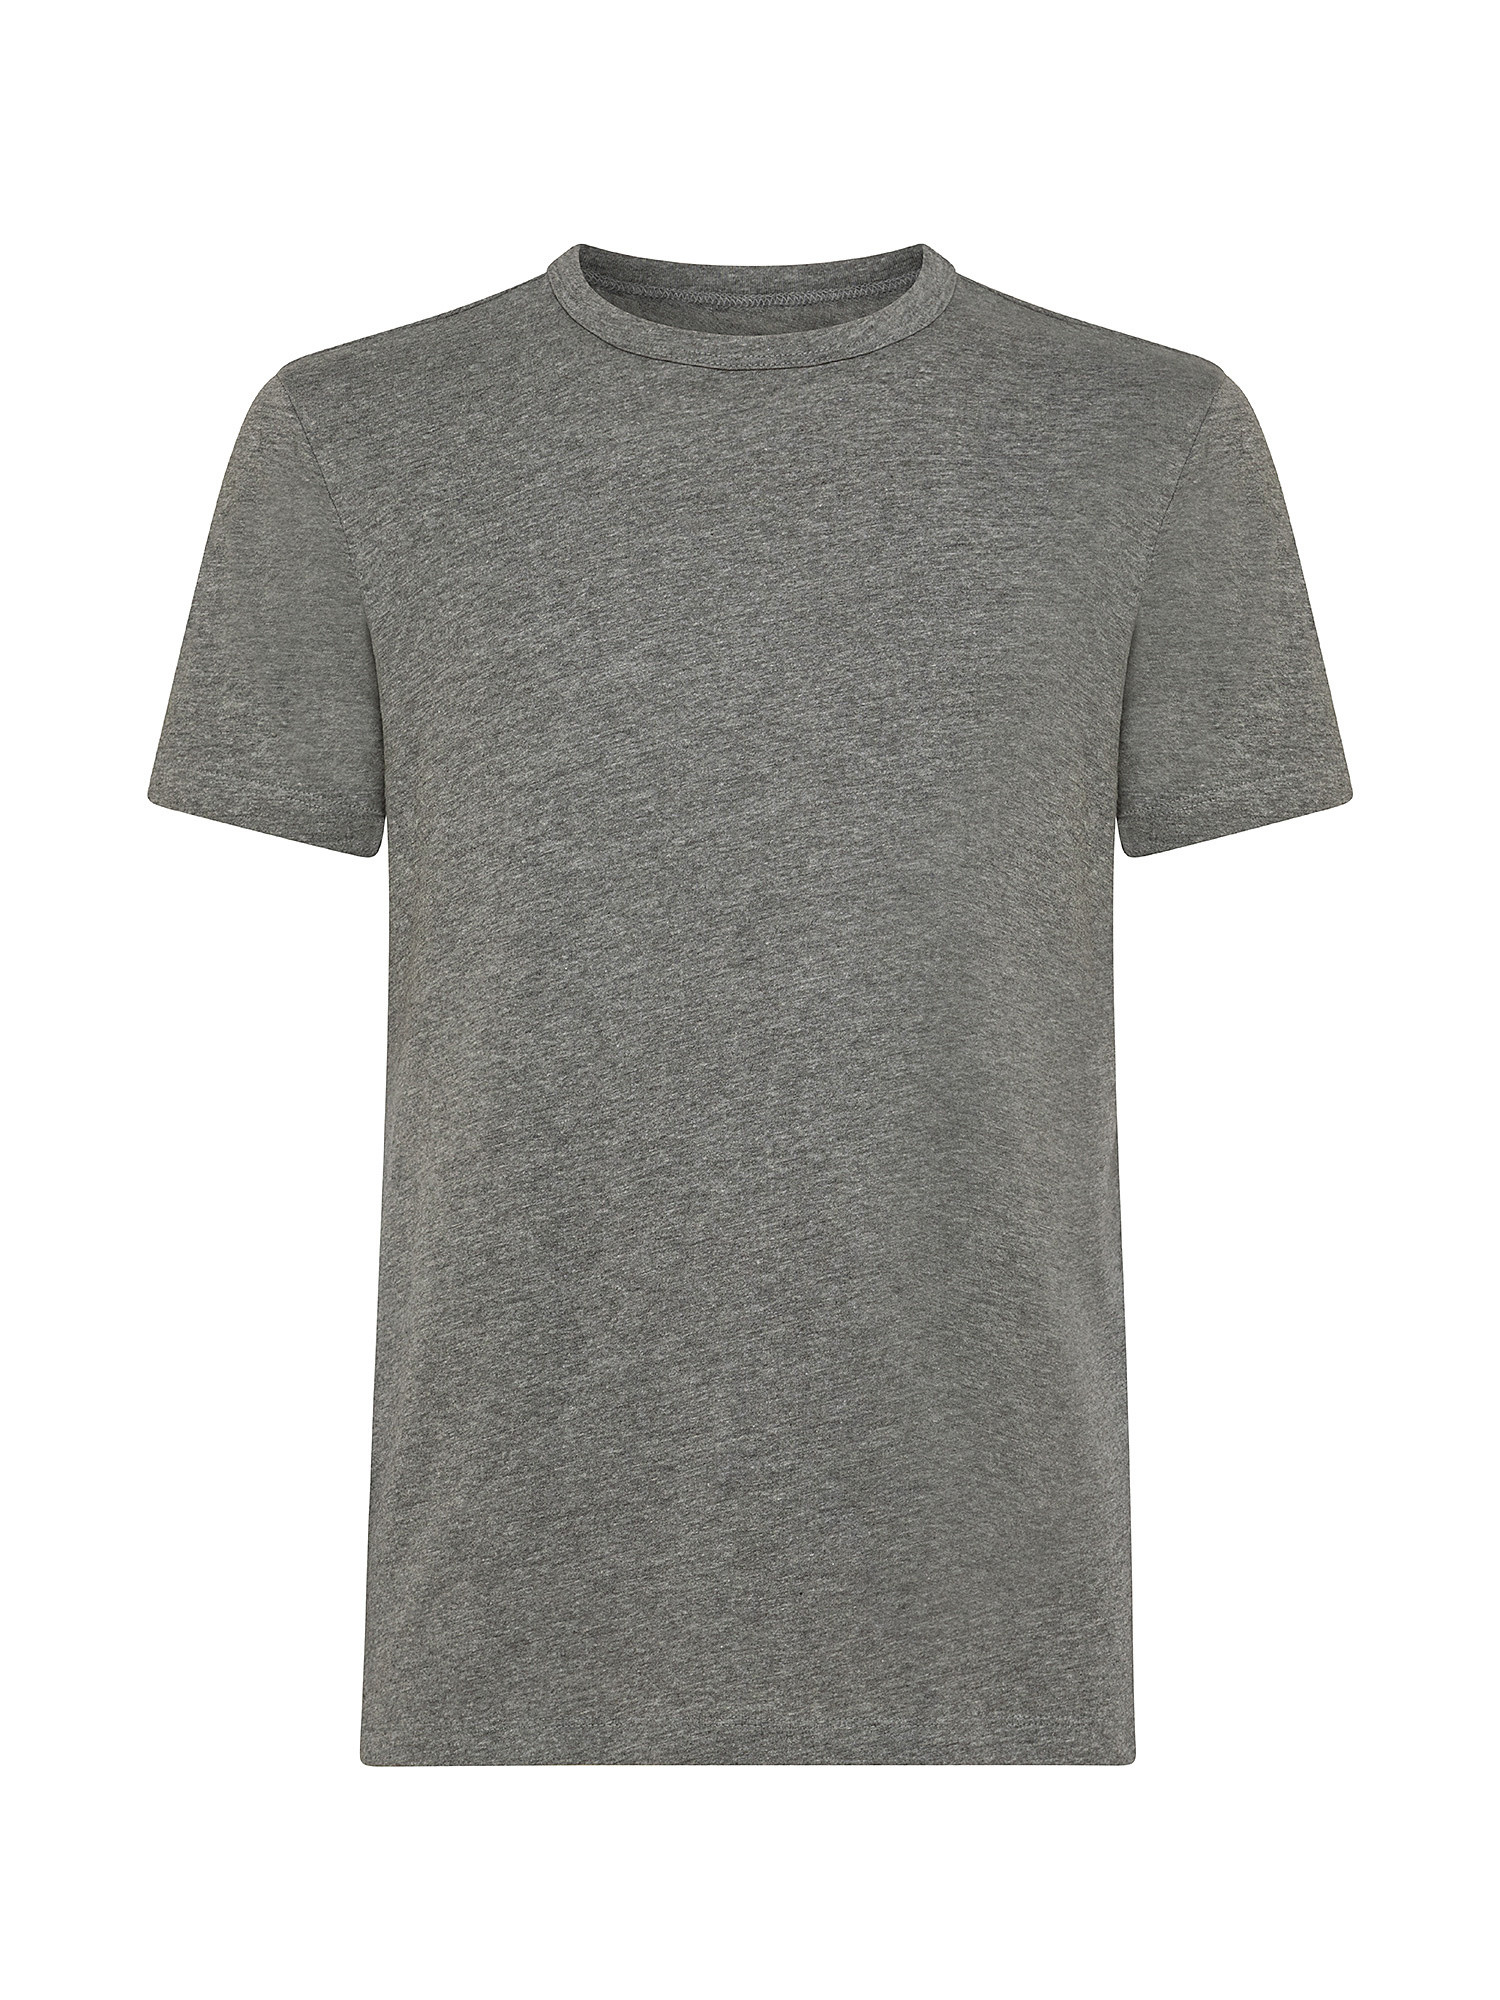 Luca D'Altieri - Set 2 t-shirt, Grigio, large image number 0